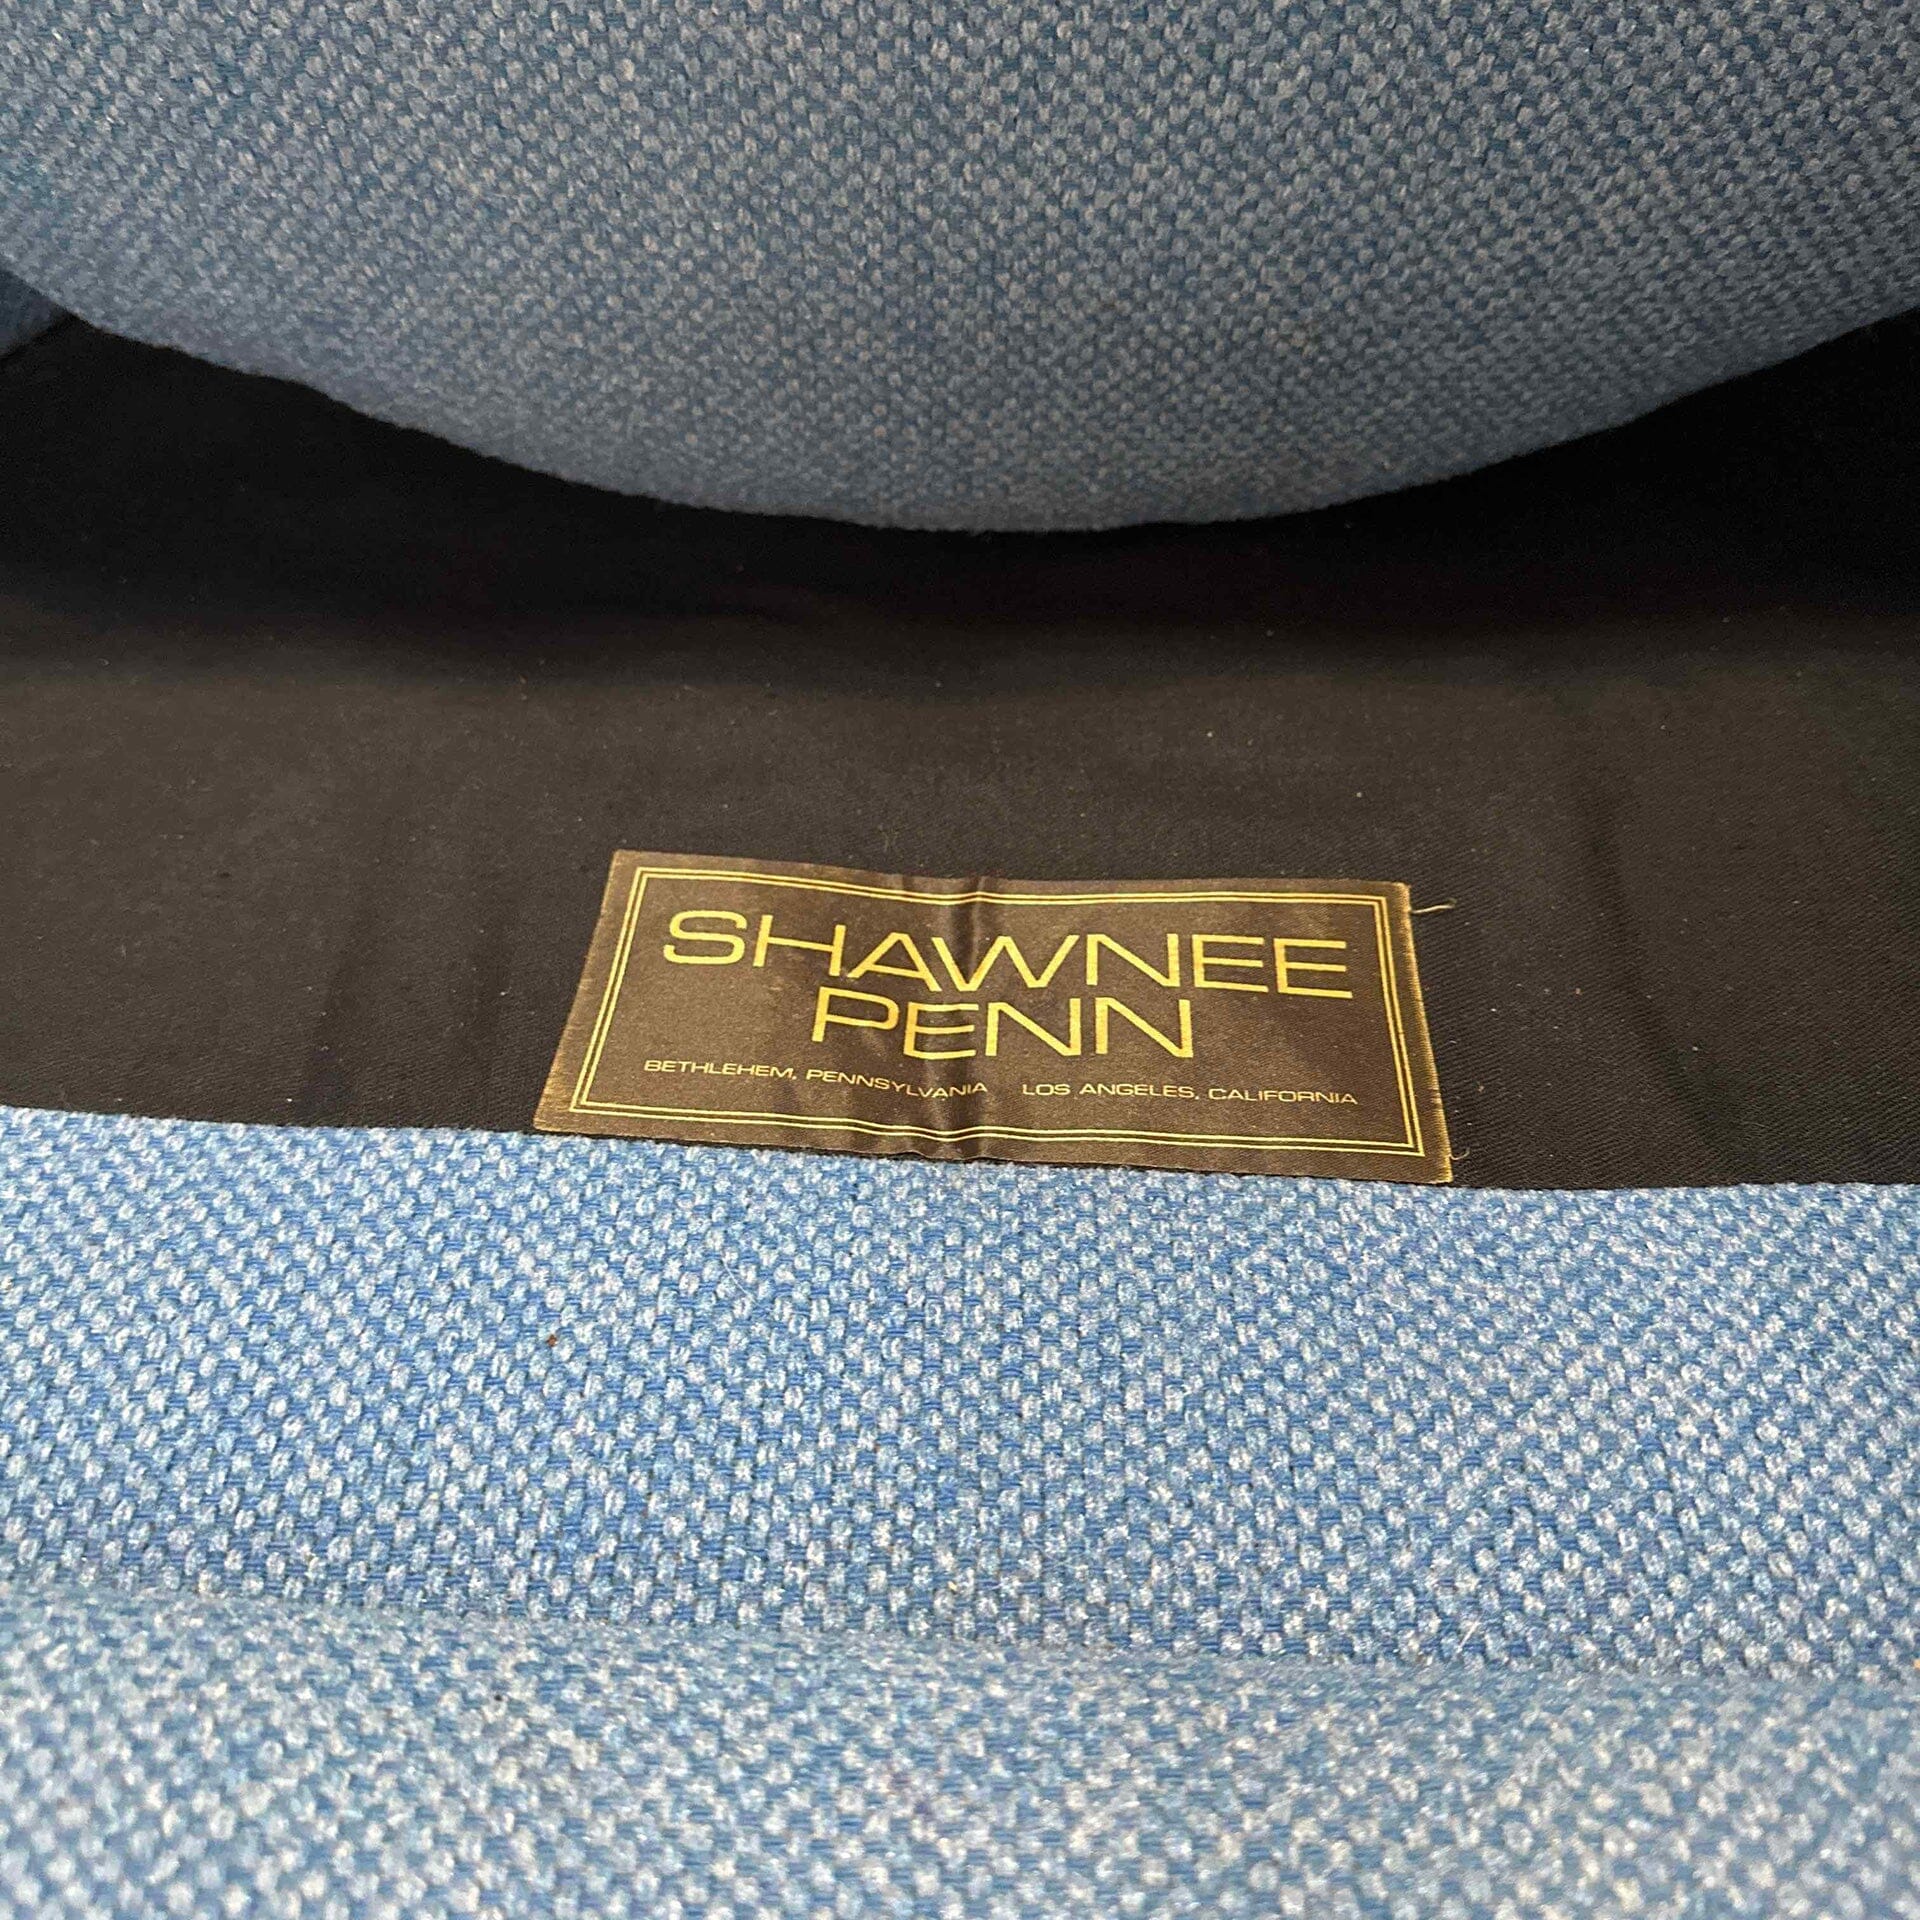 Pair of Barrel Back Swivel Chairs by Shawnee Penn Lounge Chairs Shawnee Penn 